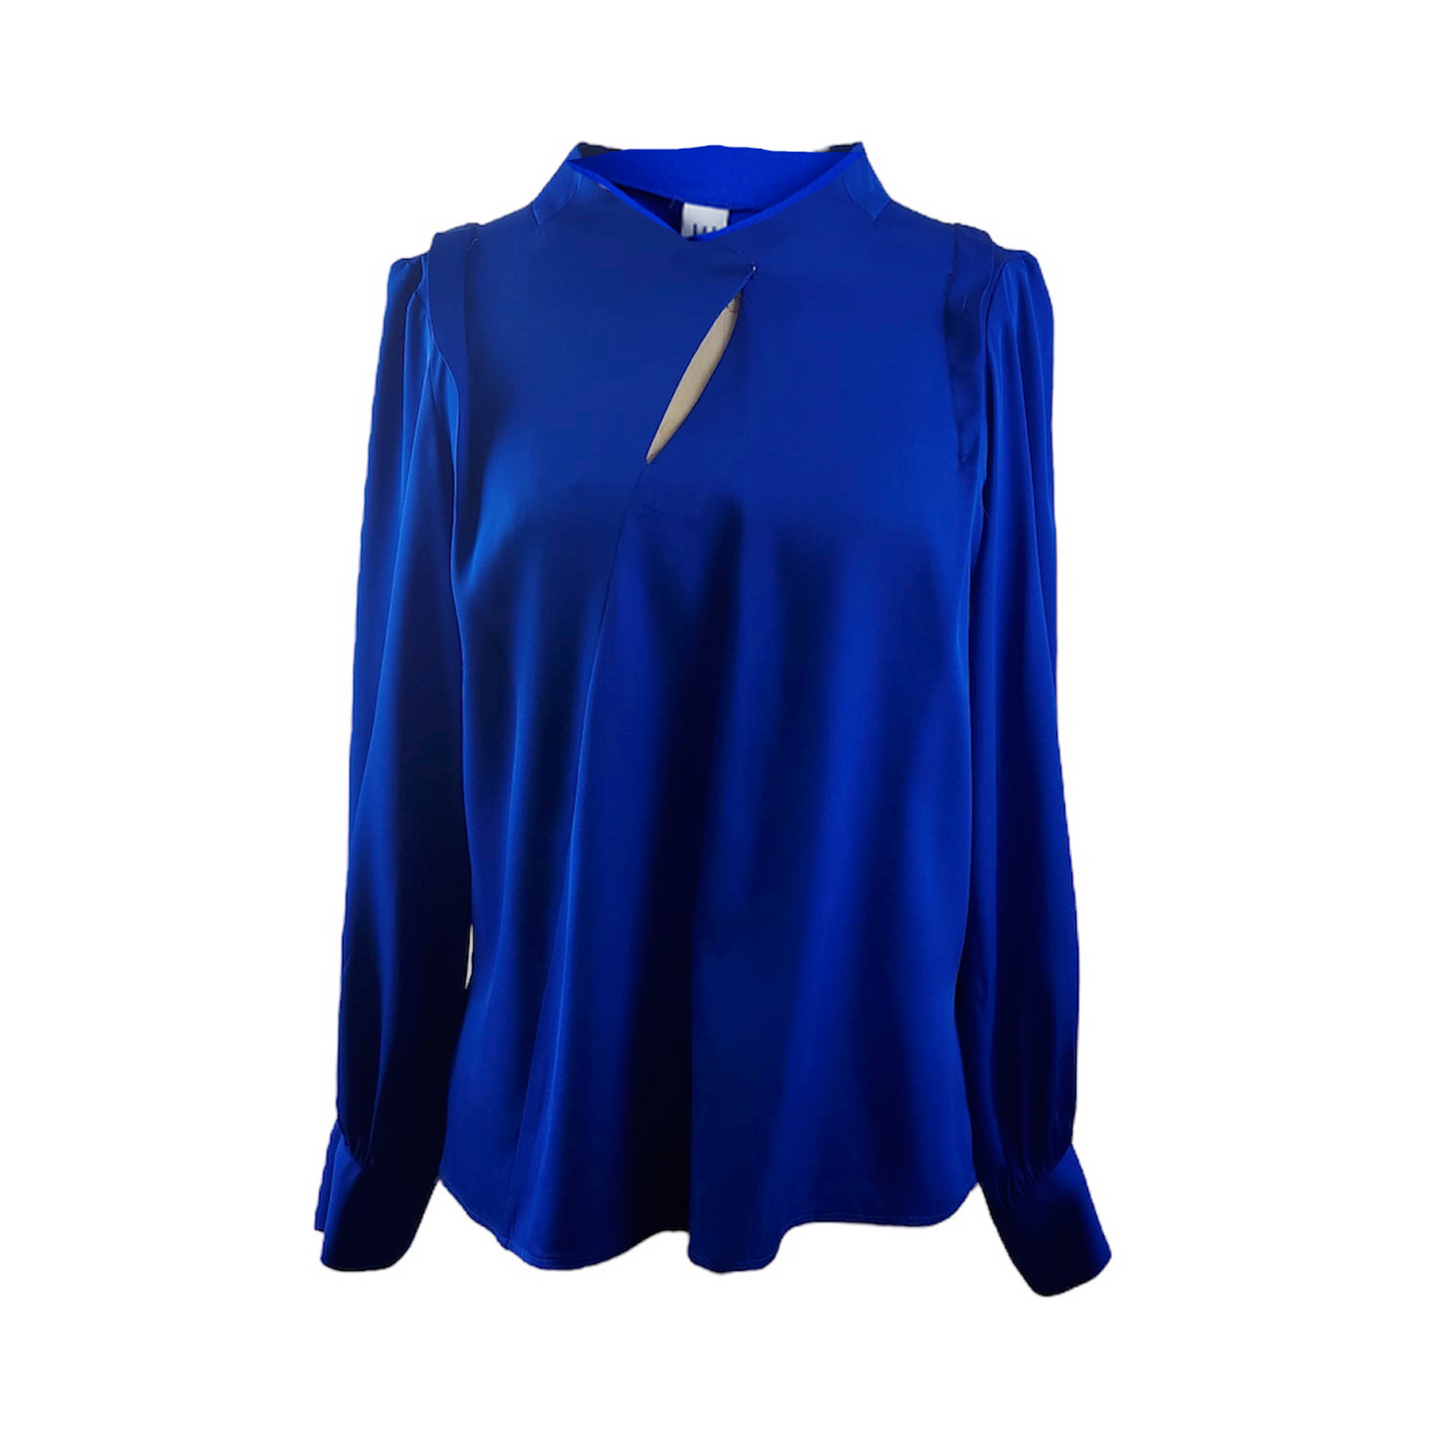 Silk blouse in cobalt